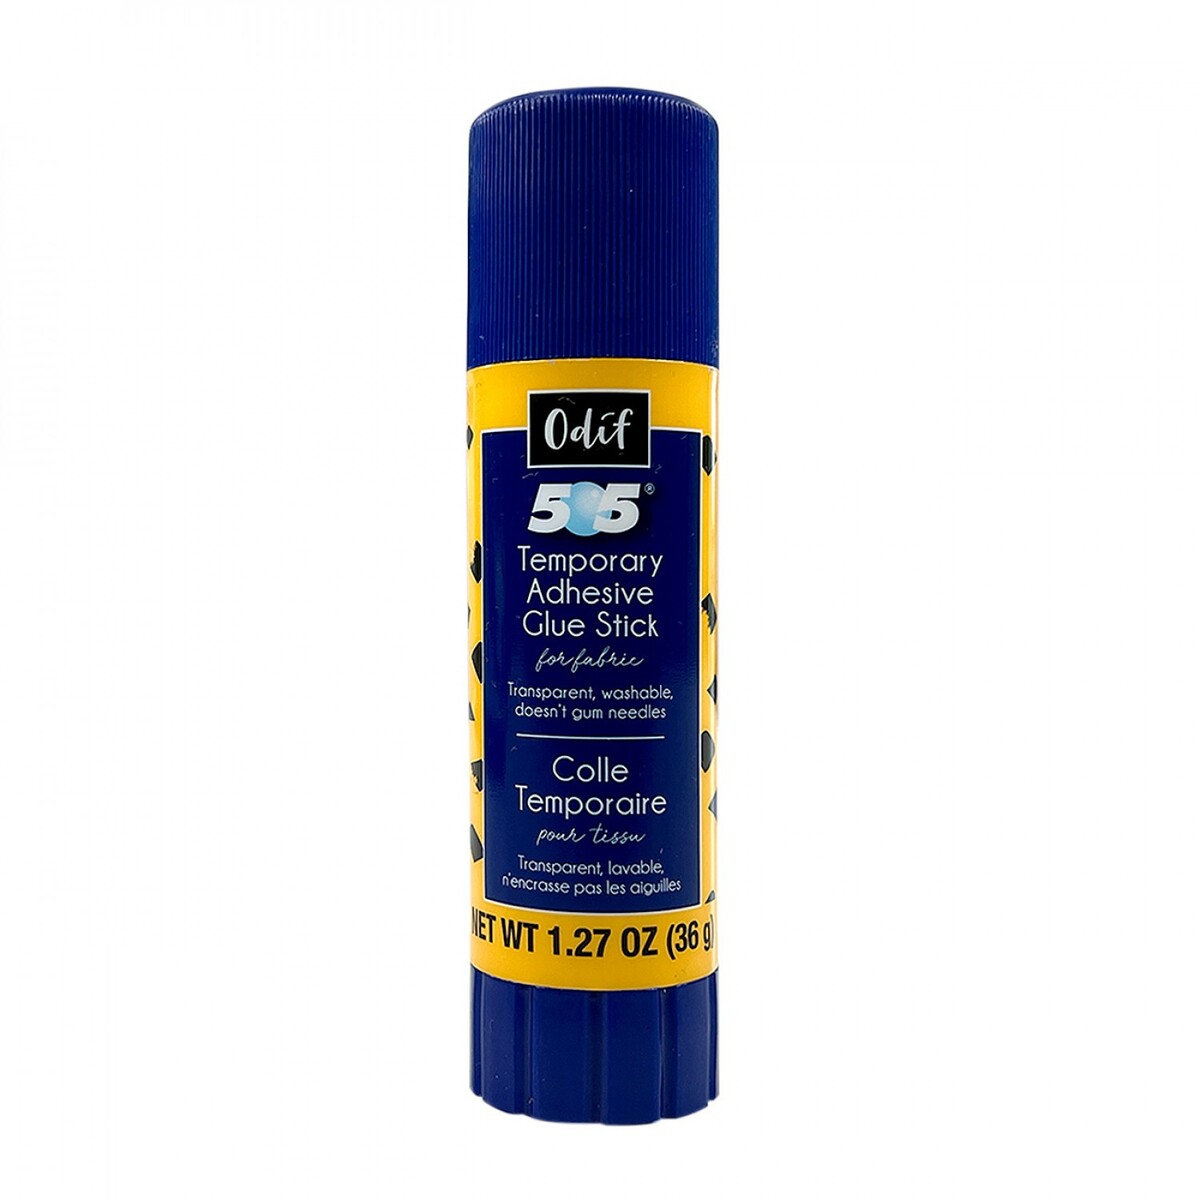 Temporary Adhesive Glue Stick | Odif #45040OD